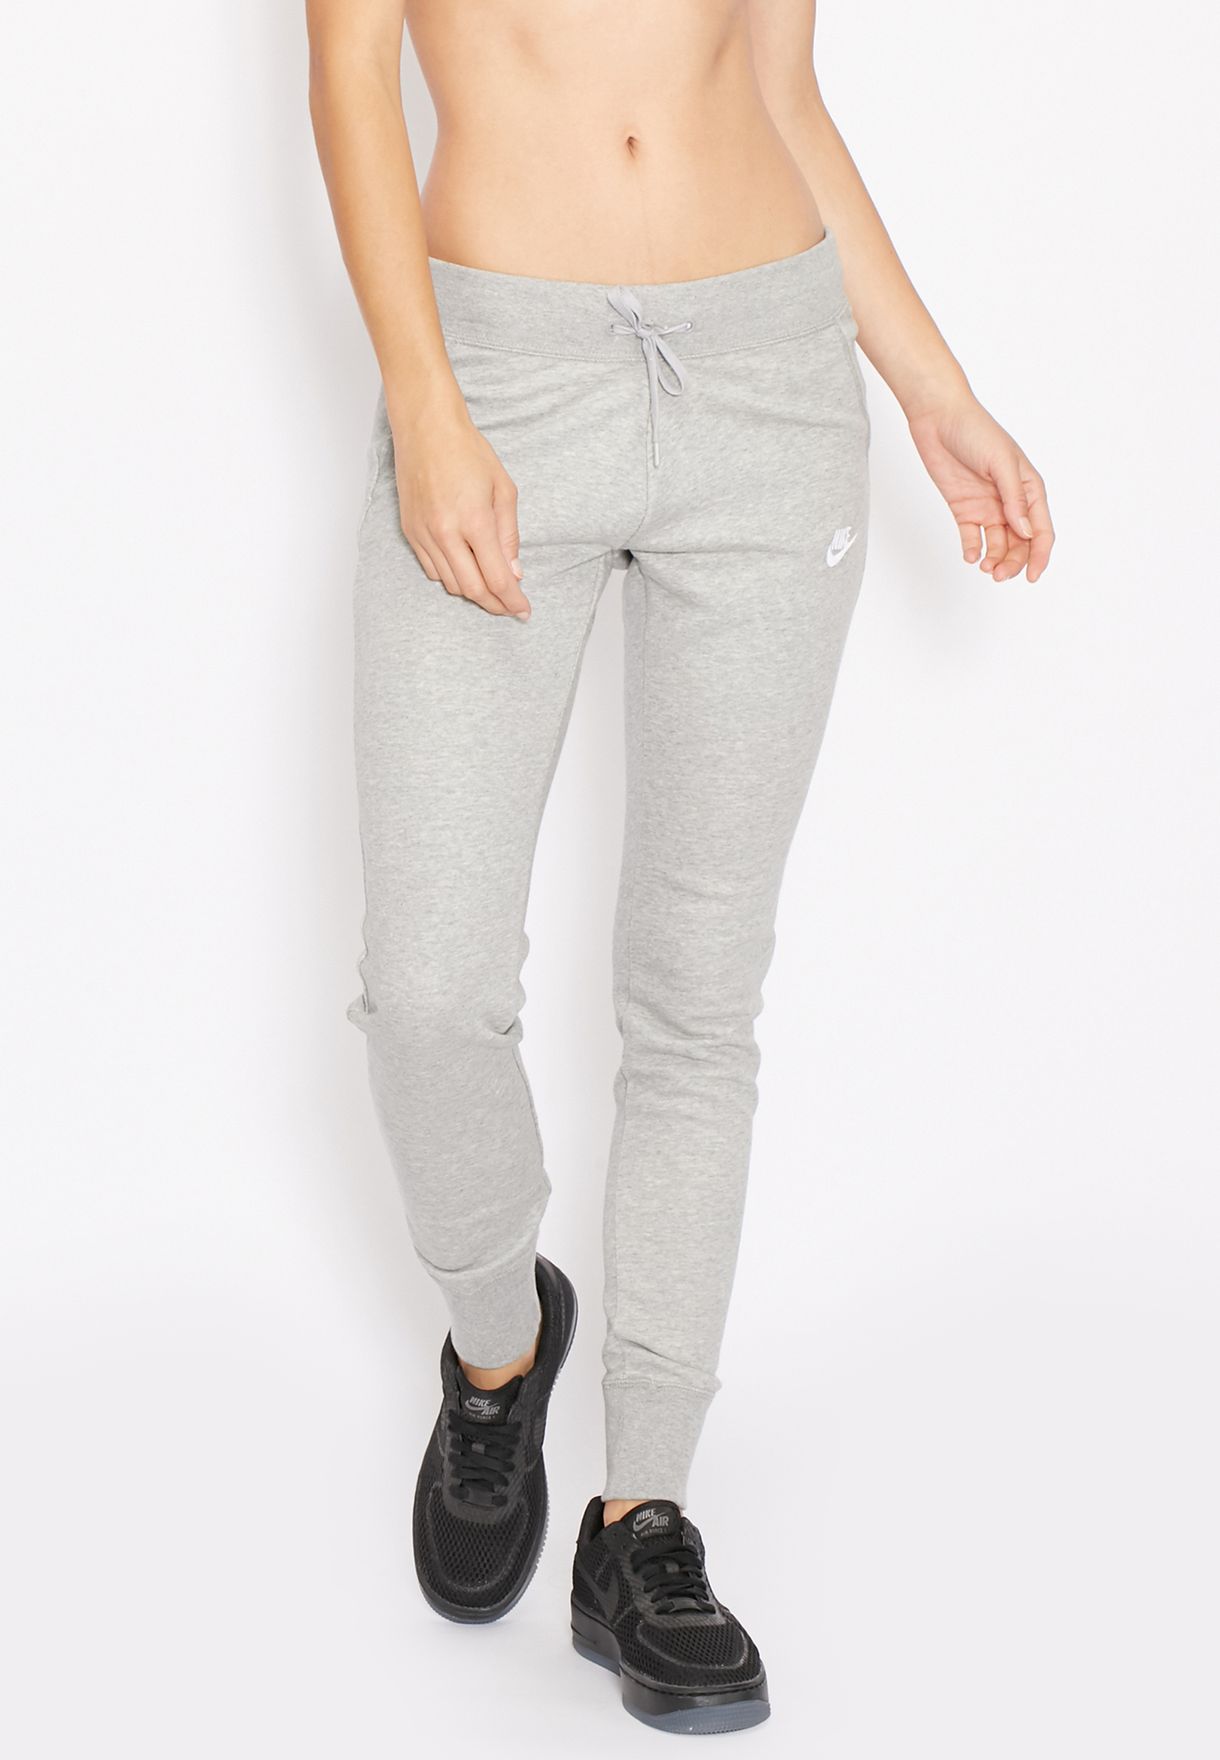 Buy Nike grey Logo Tight Sweatpants for 